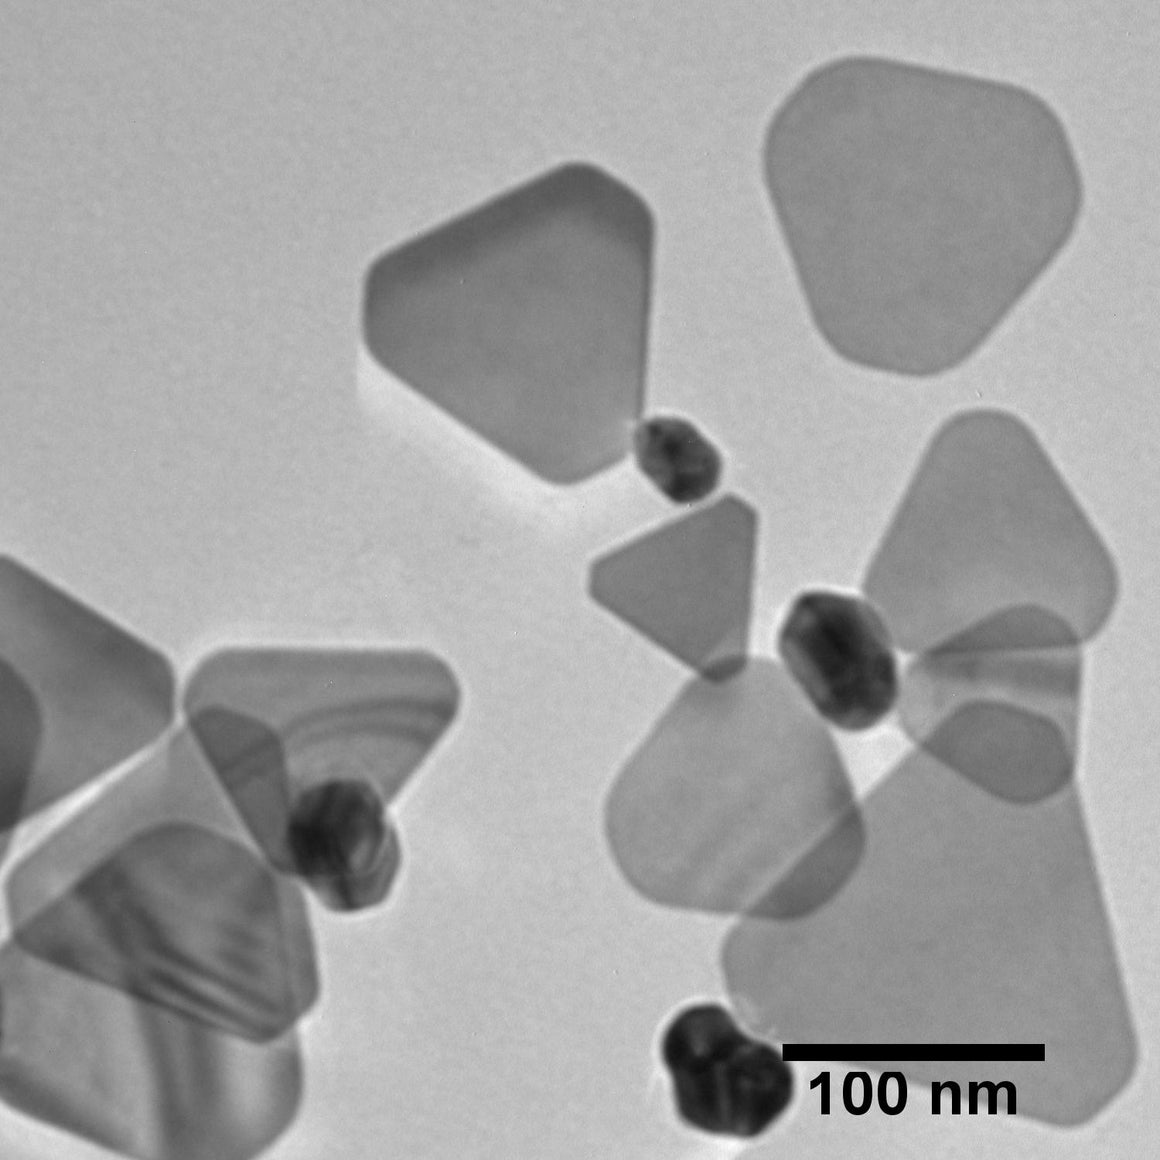 NanoXact Silver Nanoplates – PVP